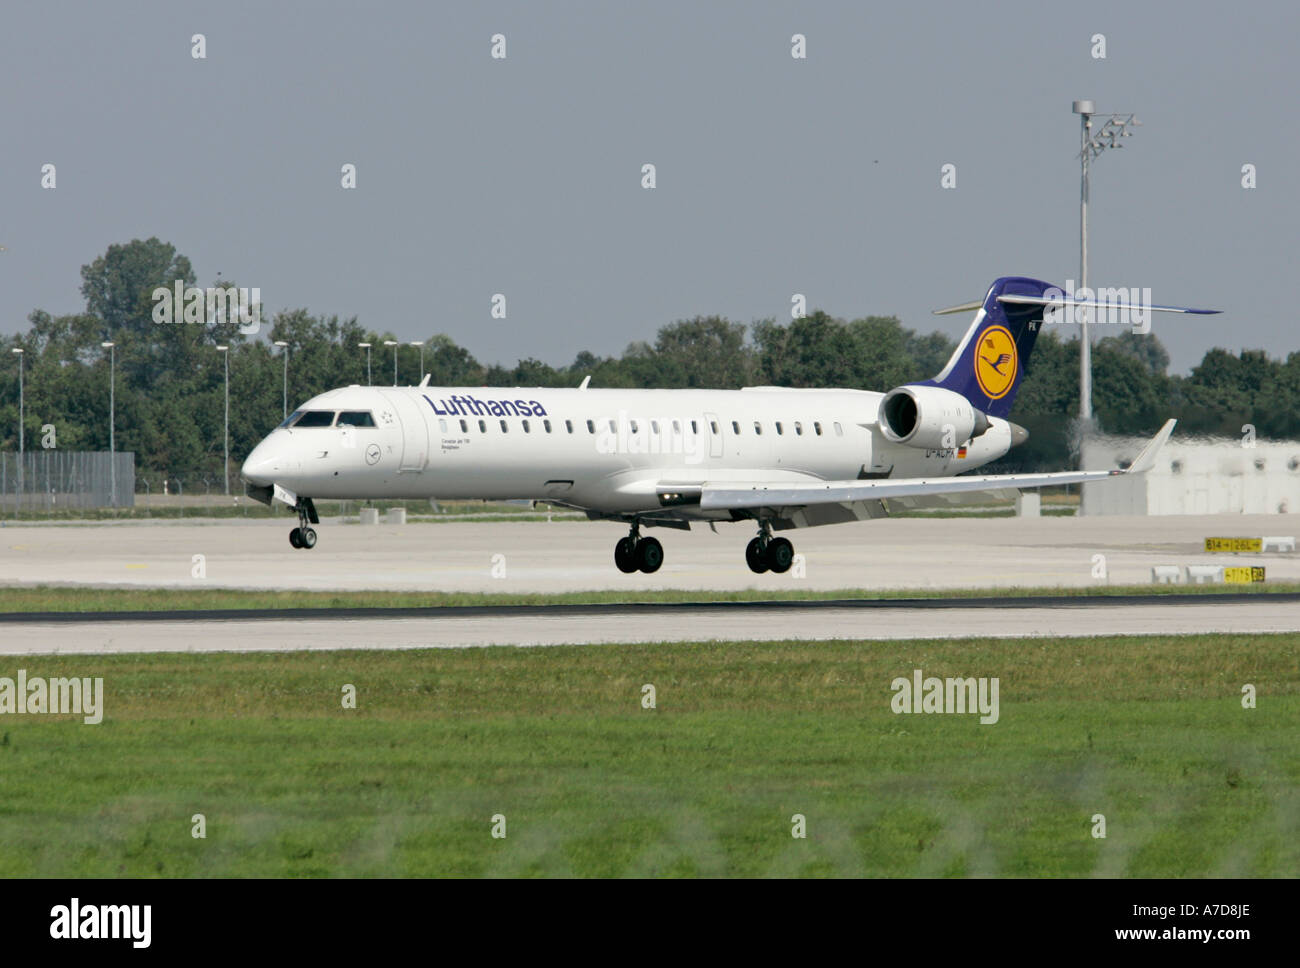 Munich, GER, 11. Aug. 2005 - The Lufthansa-Jet BESIGHEIM of type Canadair CRJ700 touch down at Munich Airport. Stock Photo